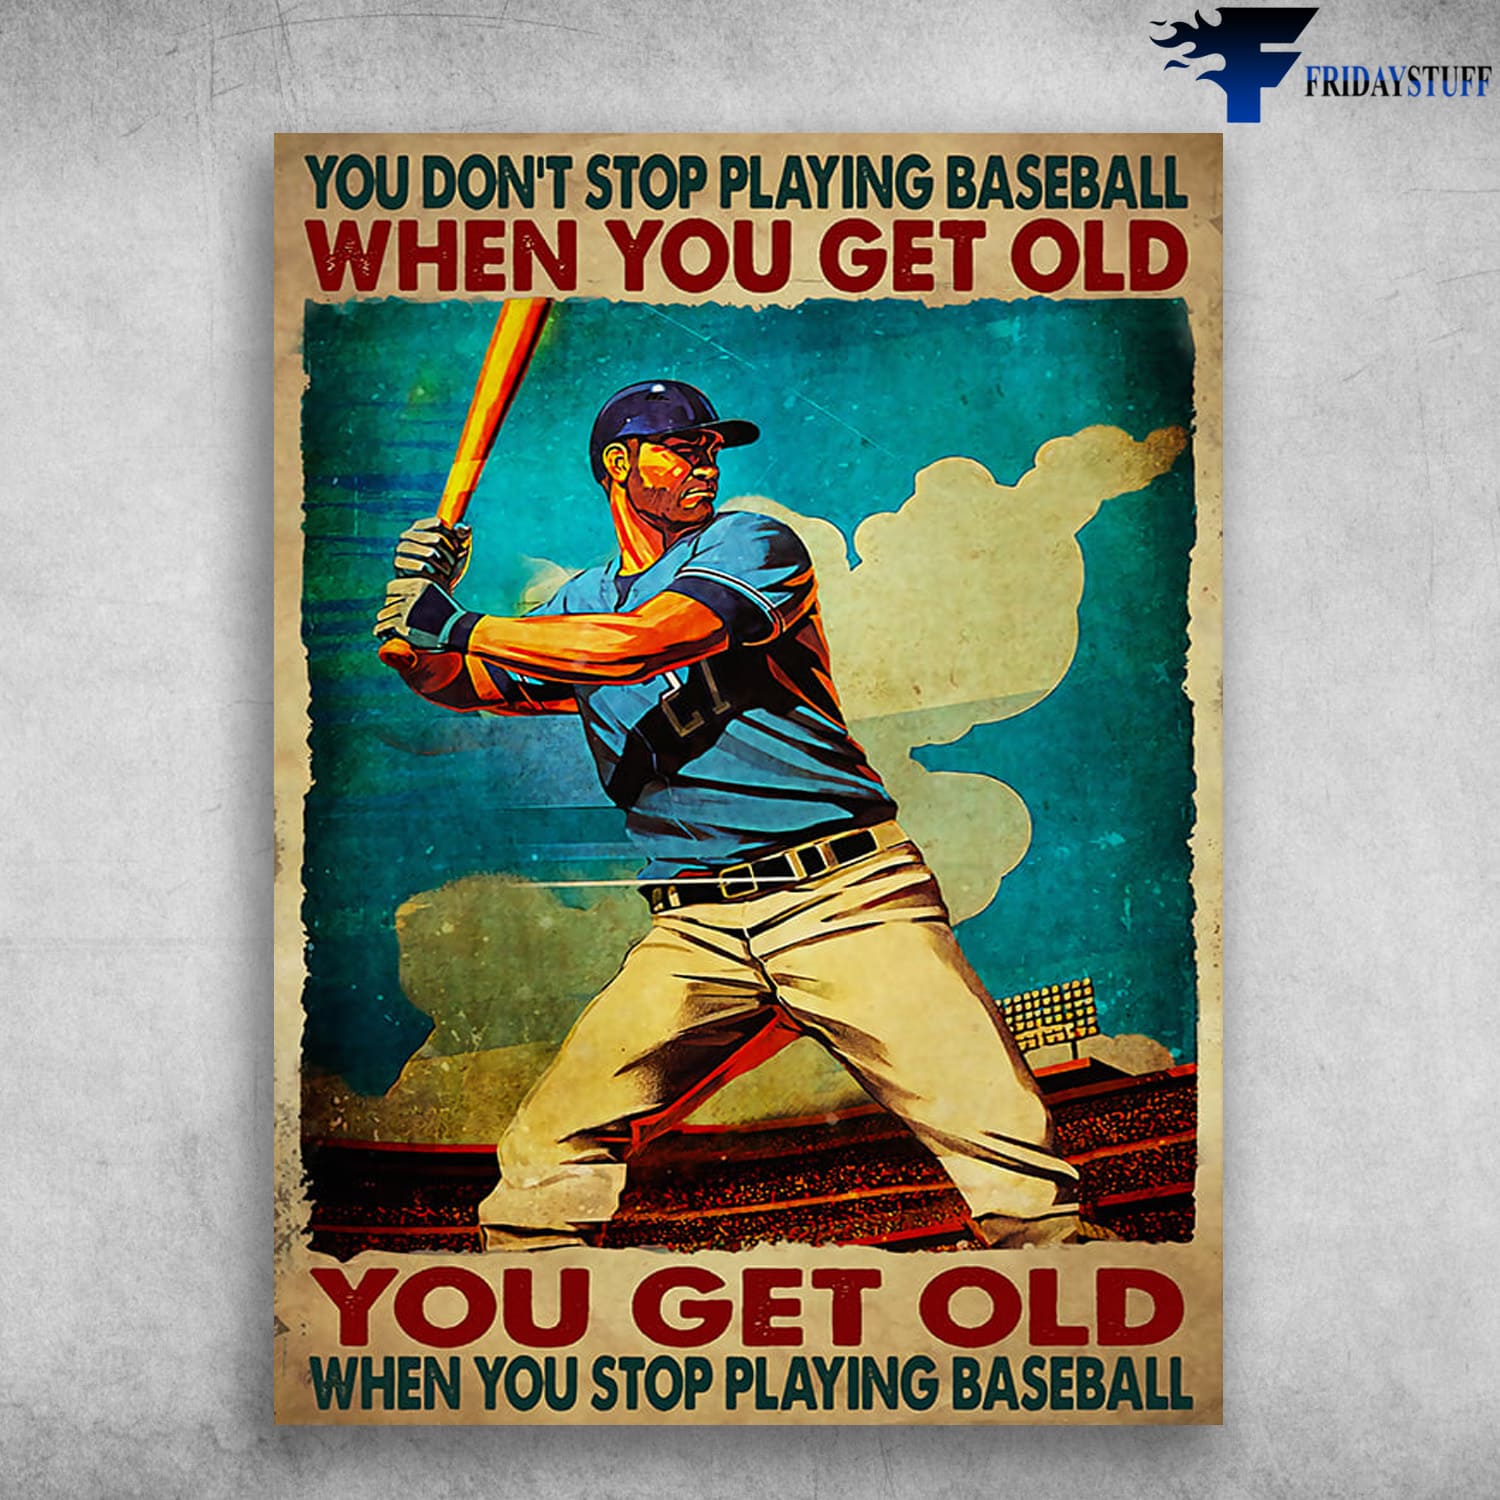 Baseball Man, Baseball Player, You Don't Stop Playing Baseball When You Get Old, You Get Old When You Stop Playing Baseball